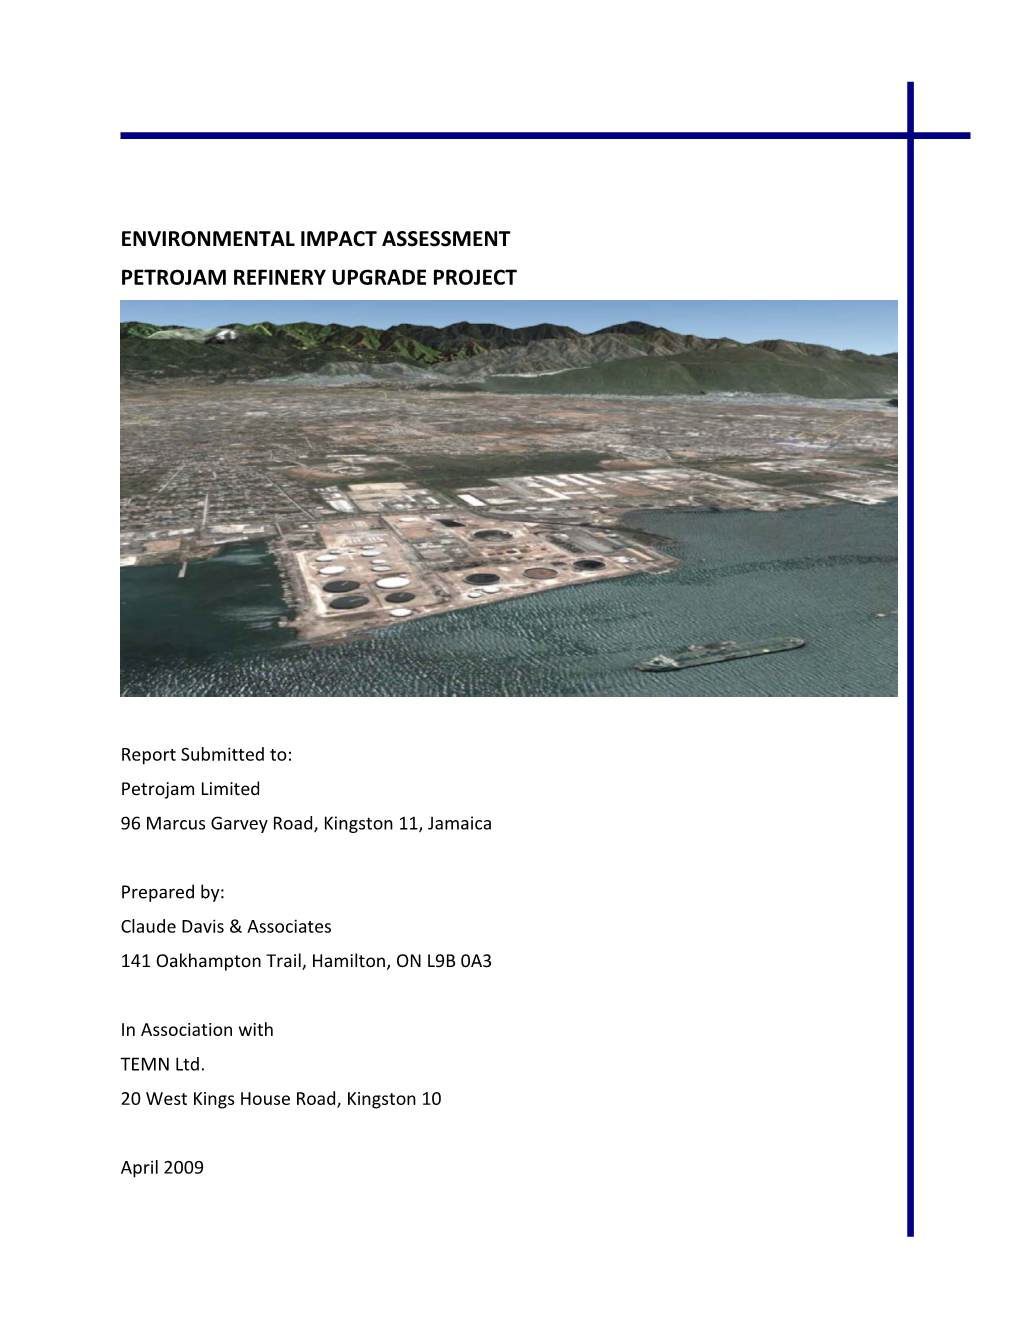 Environmental Impact Assessment, Petrojam Refinery Upgrade Project